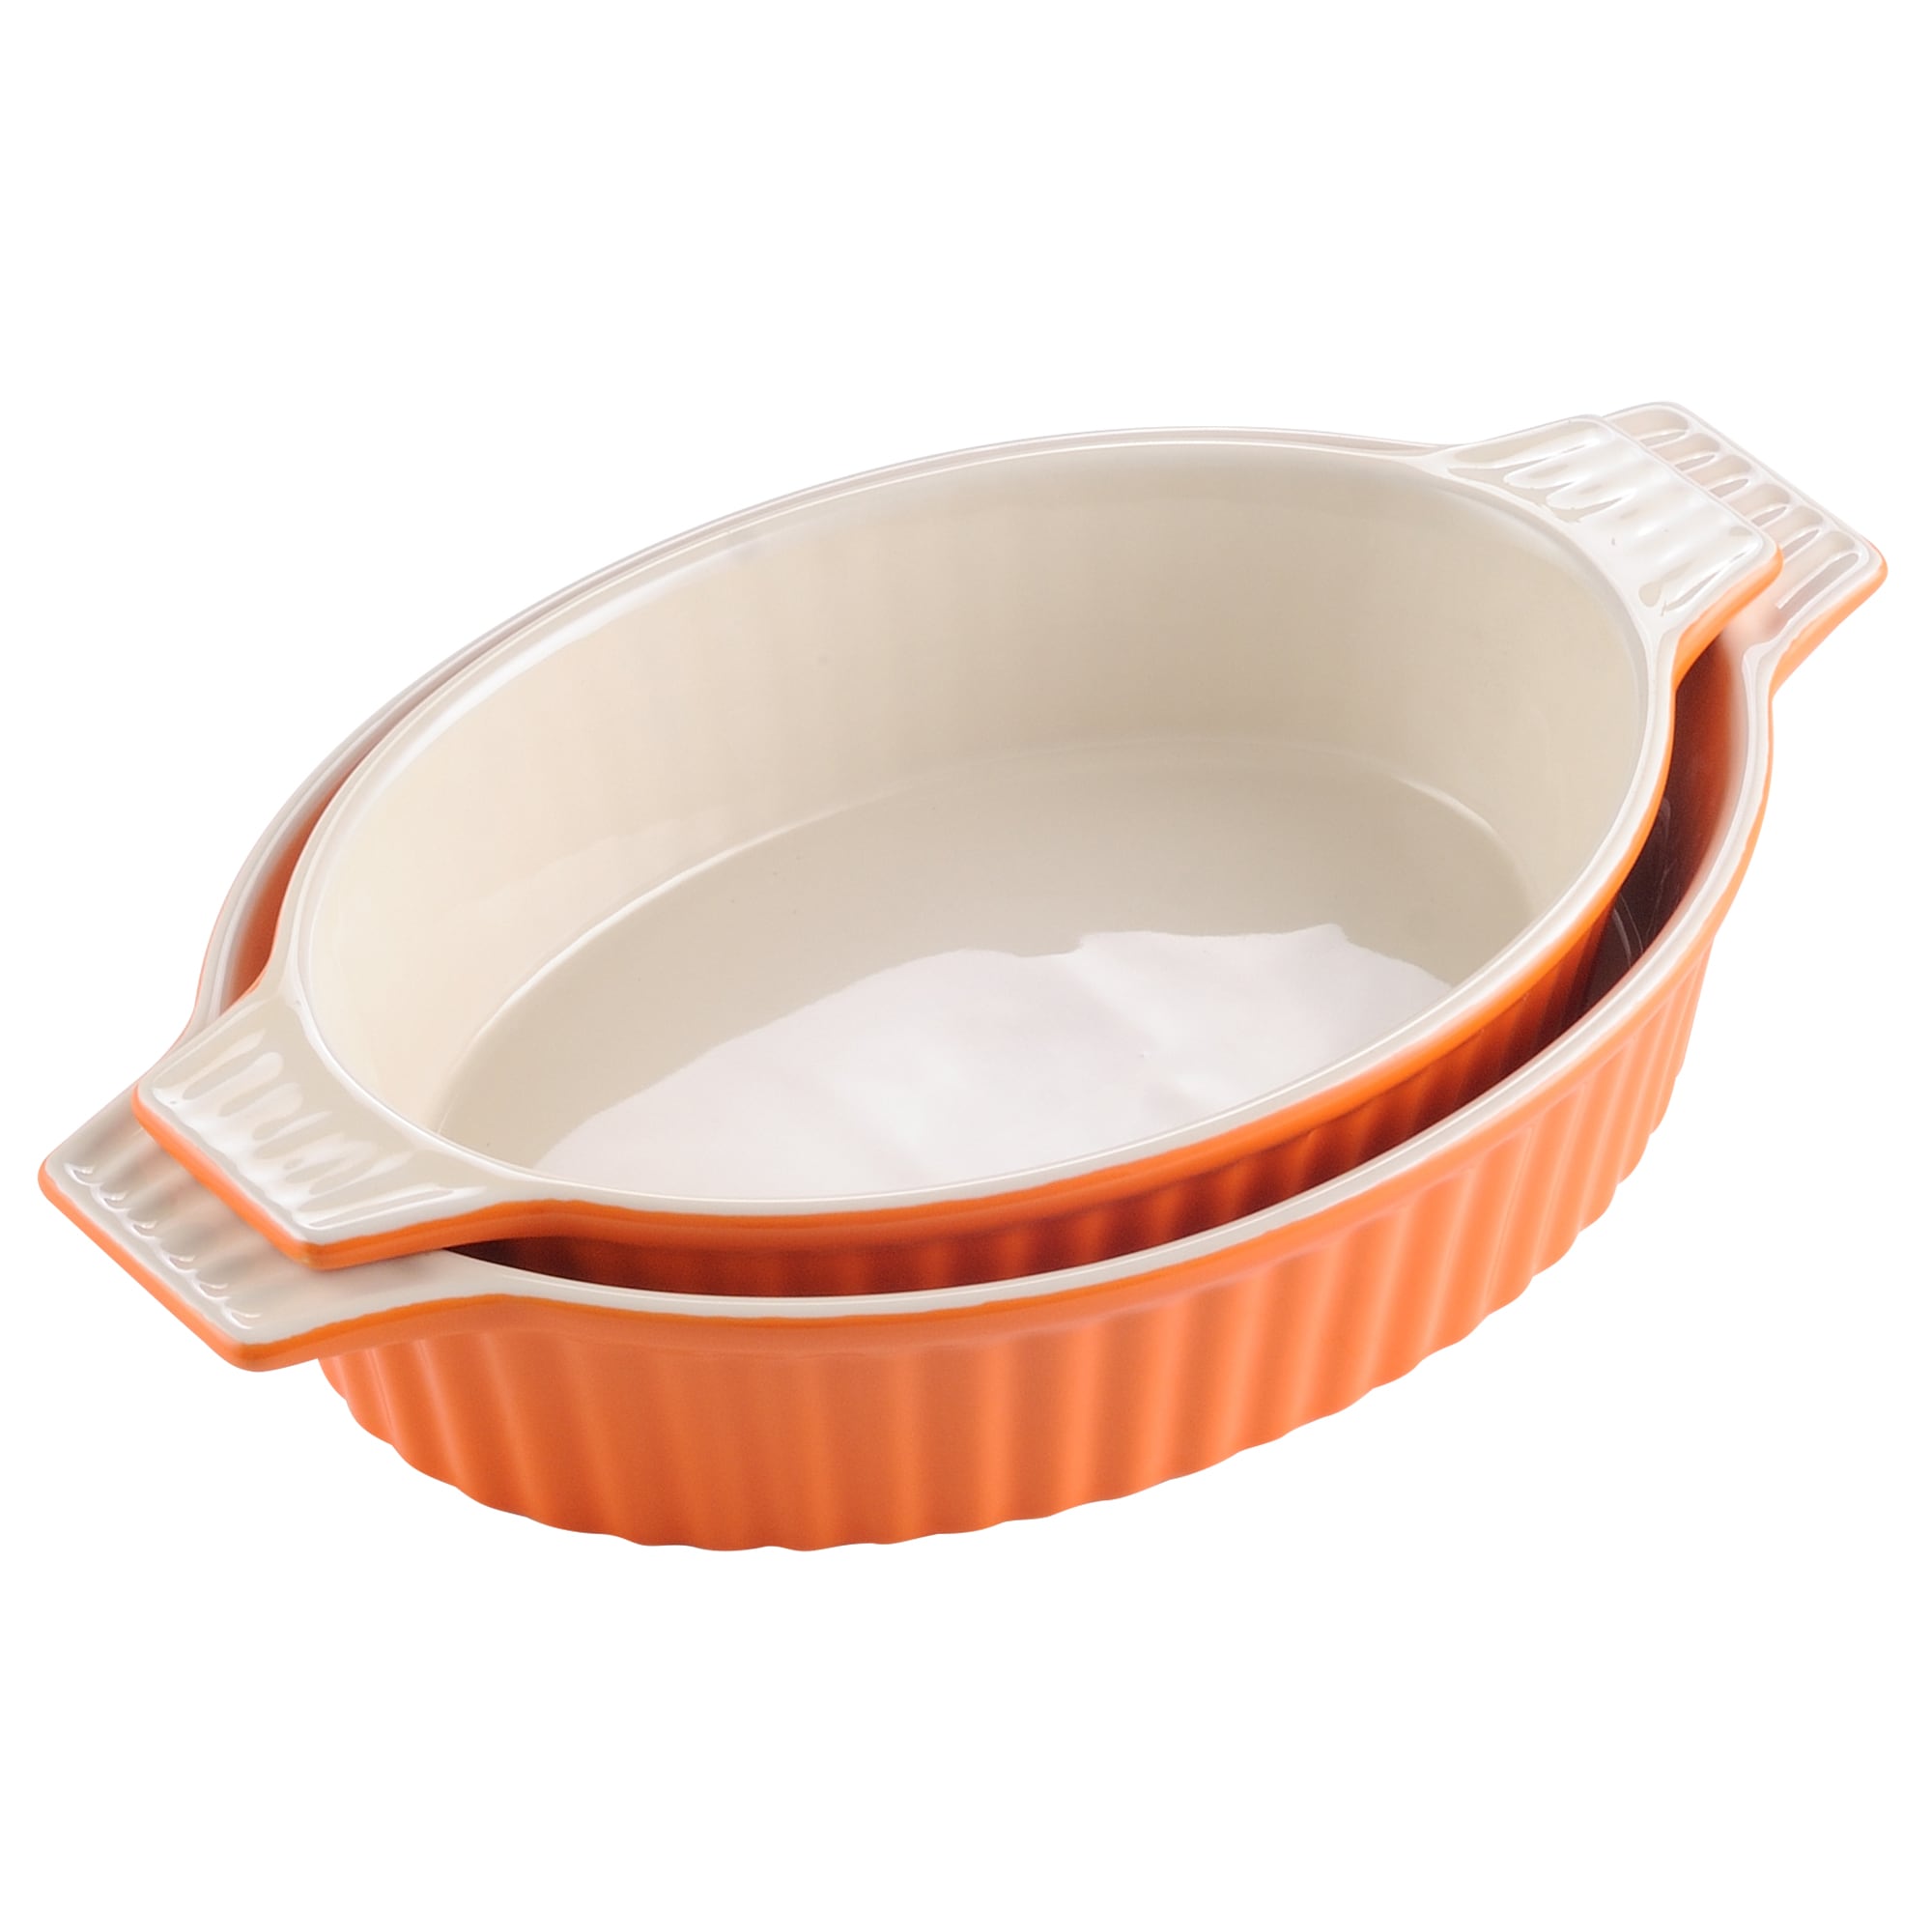 MALACASA Orange 2-Piece Ceramic Bakeware Set in the Bakeware